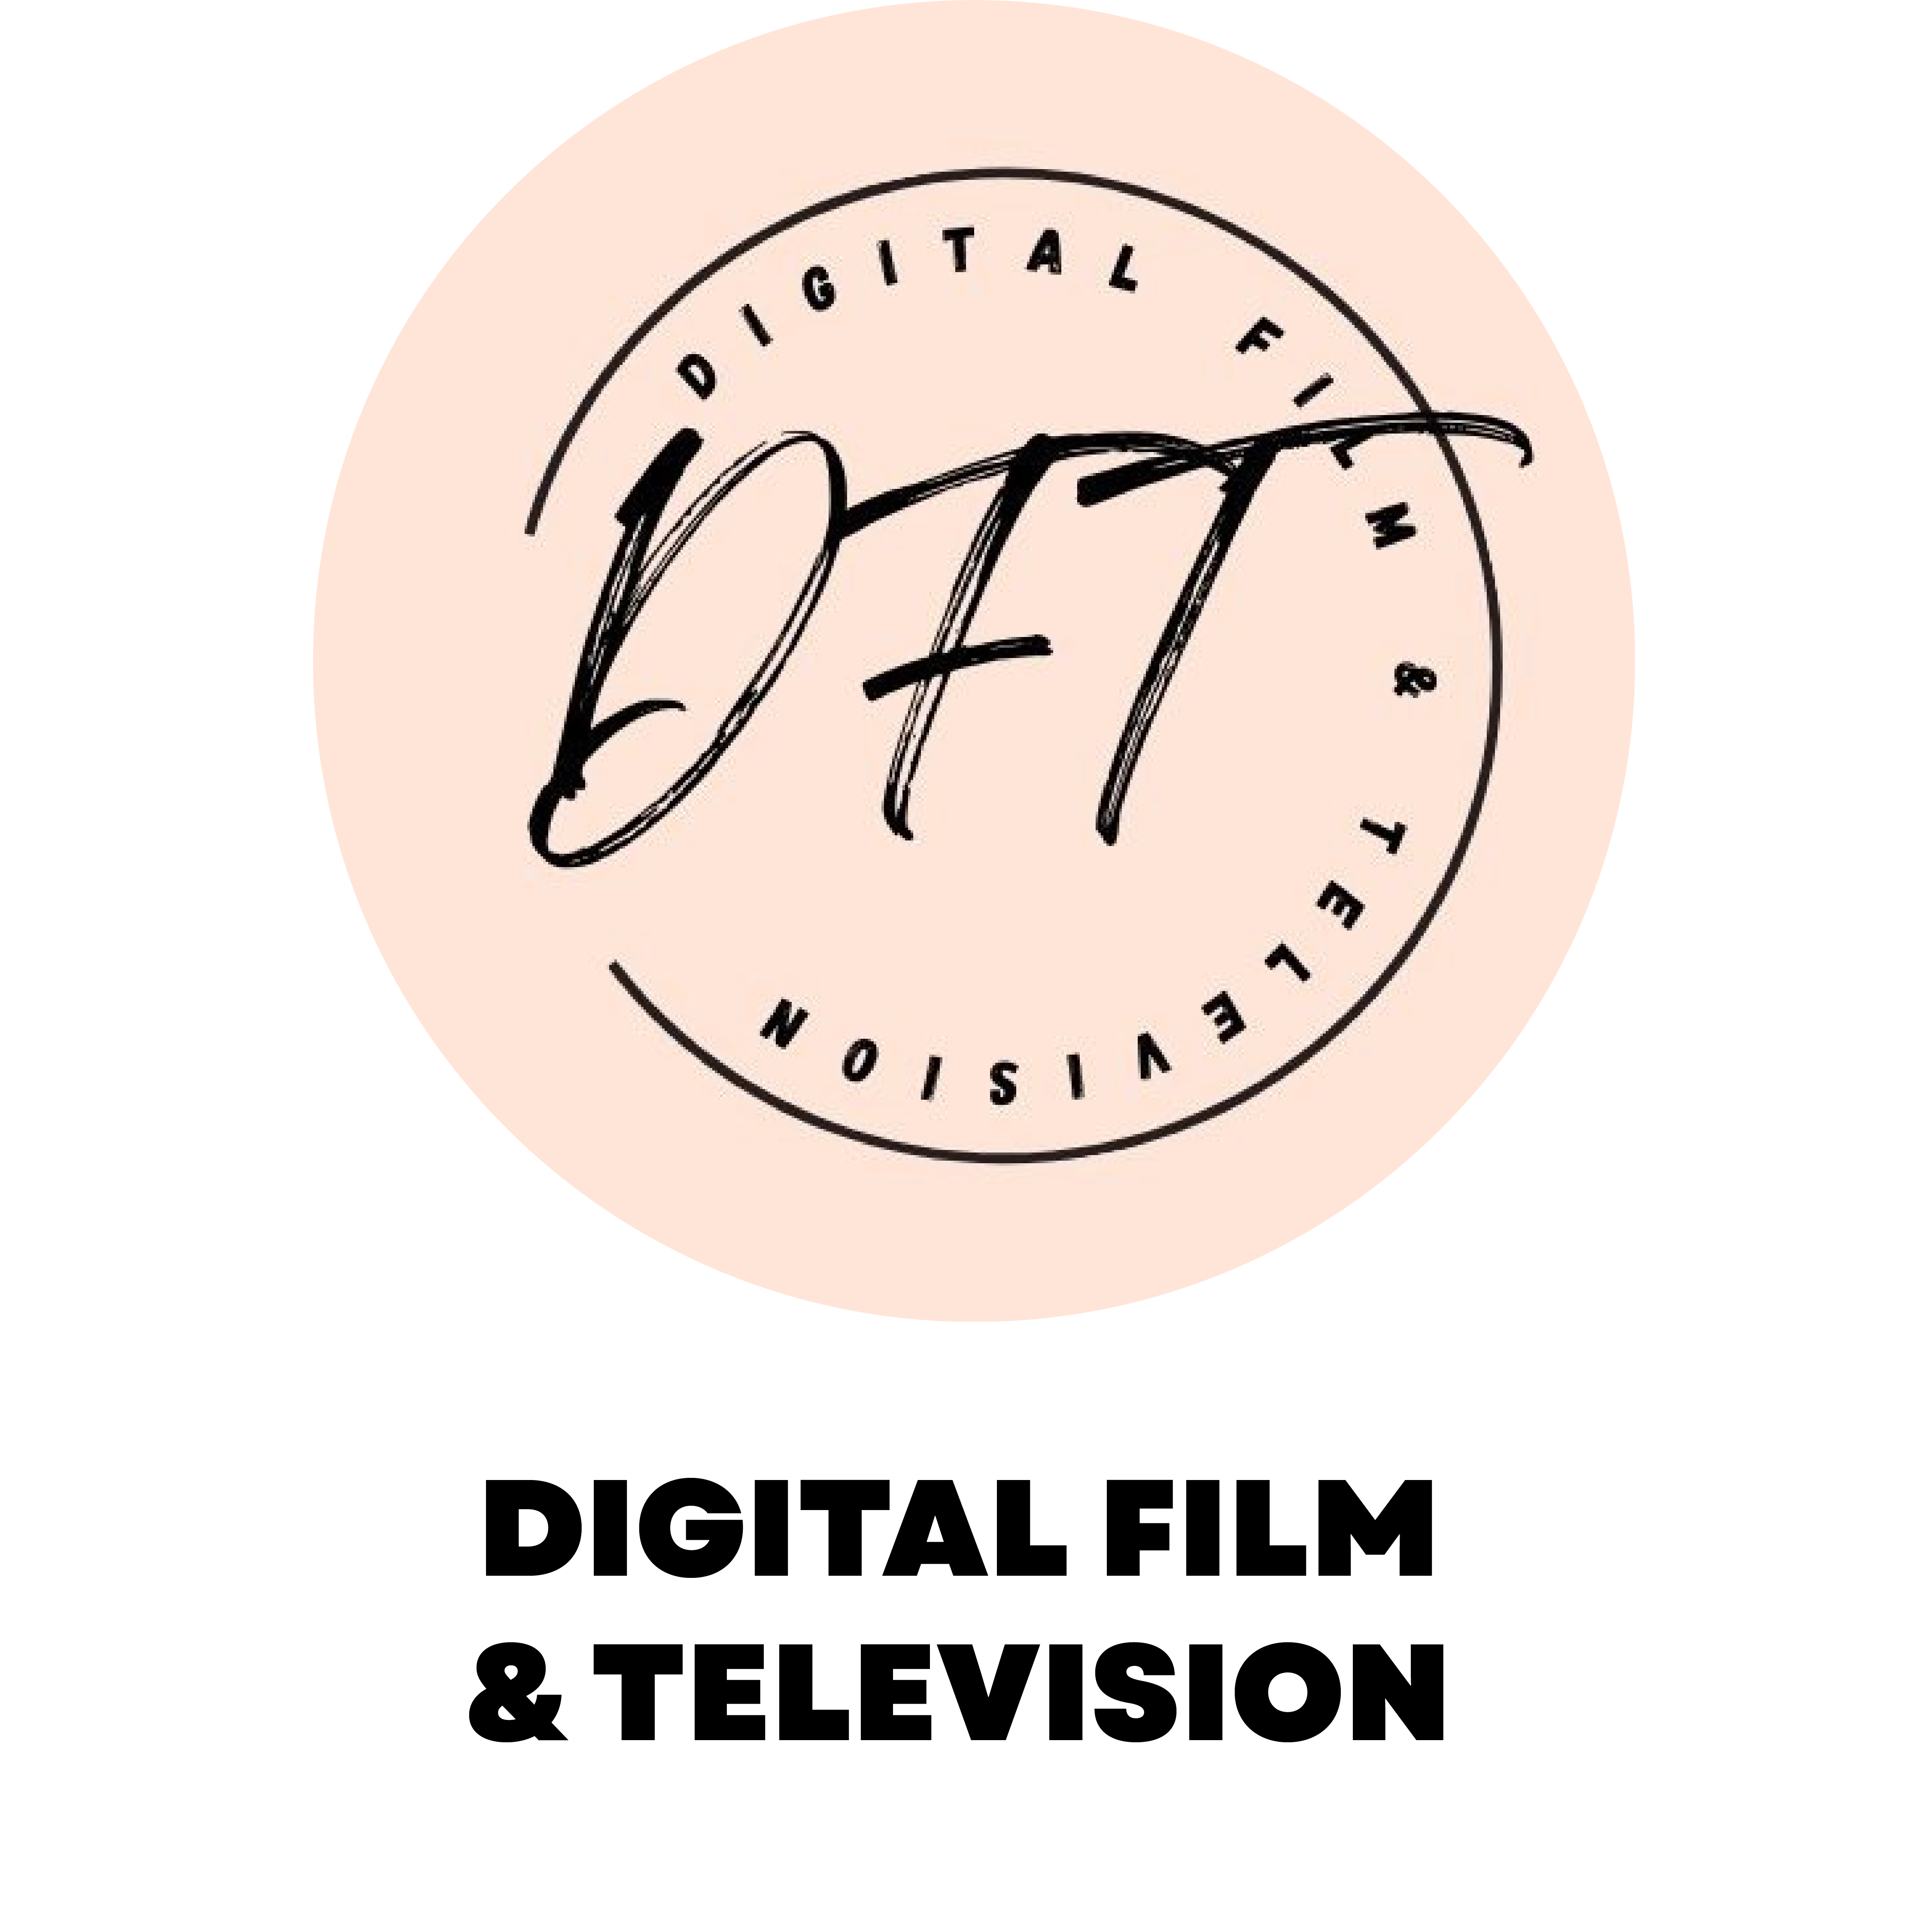 Digital Film & Television Interest Group